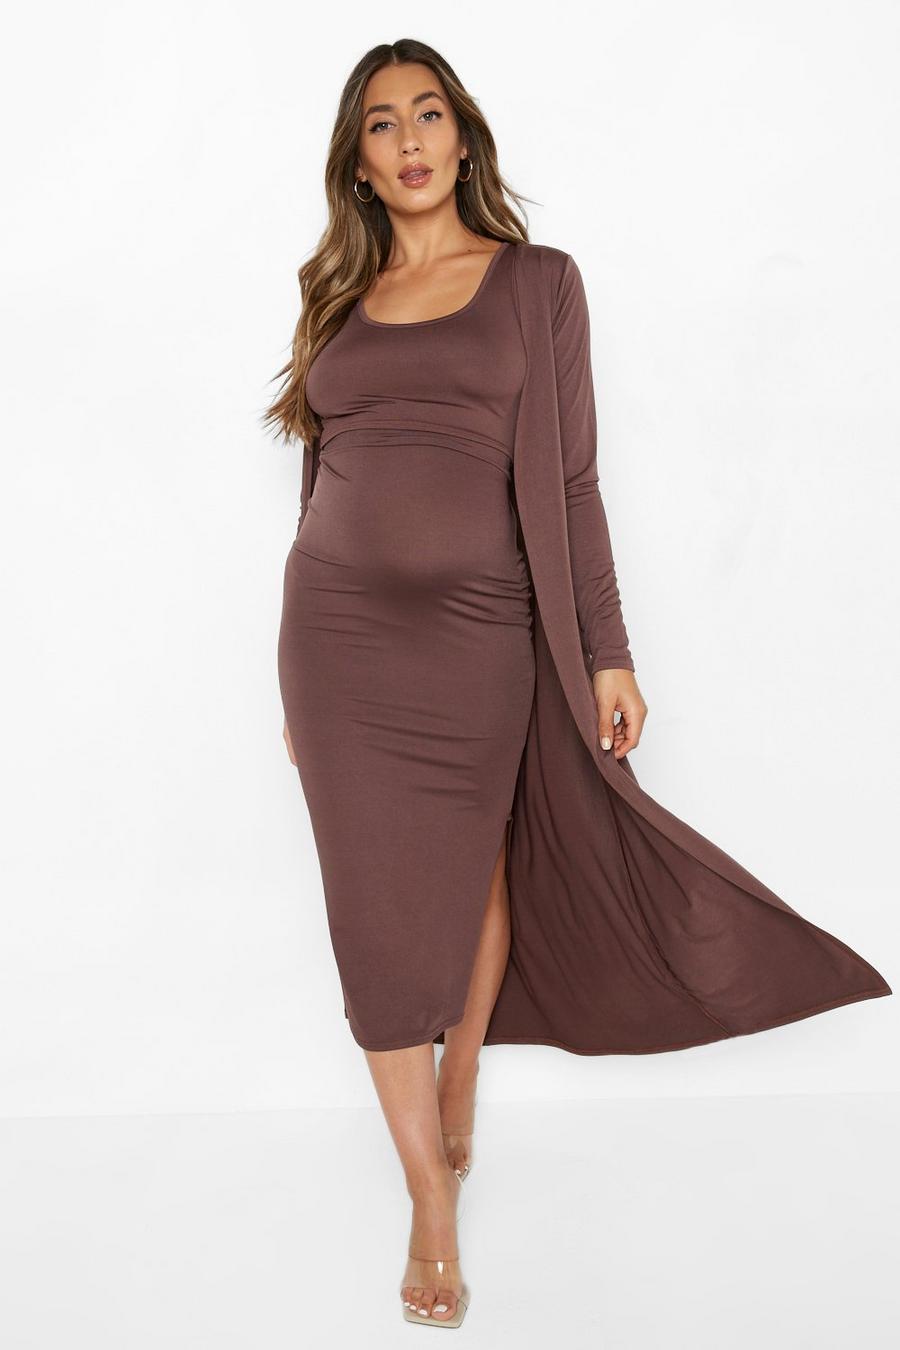 Chocolate brown Maternity Slinky Midaxi Dress Duster Coat